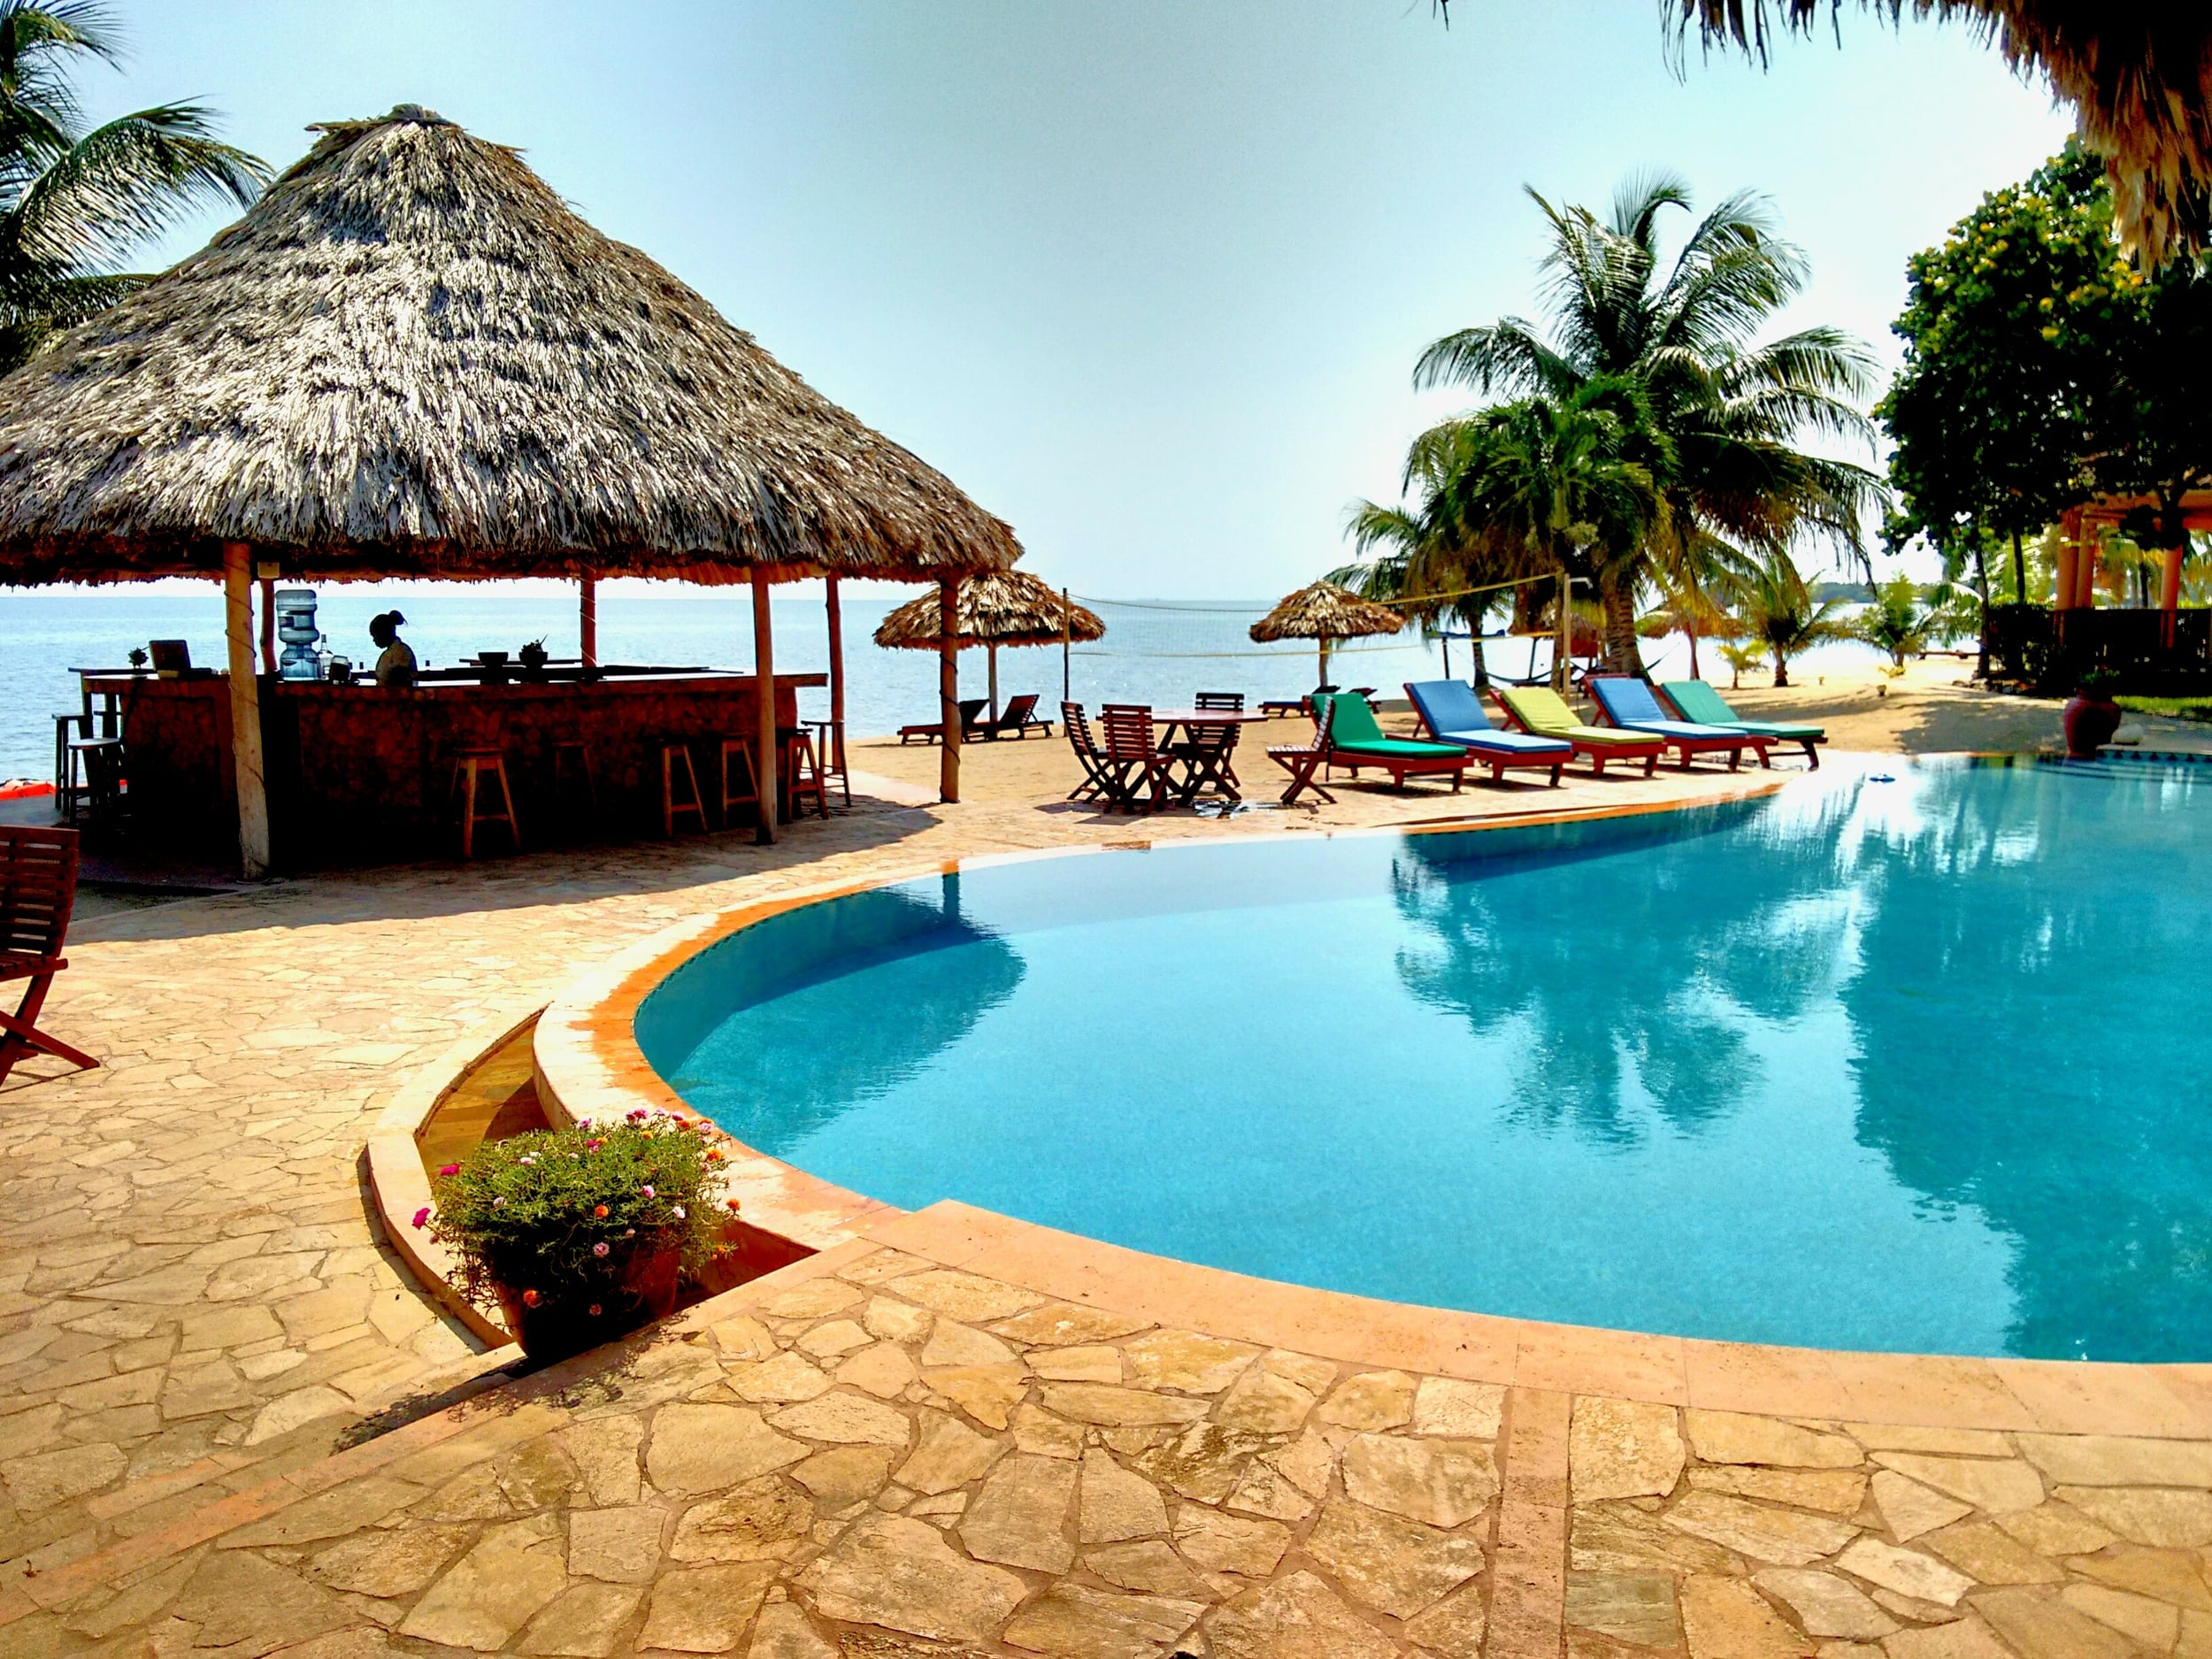 Belizean Dreams Resort, Hopkins Beach, Belize